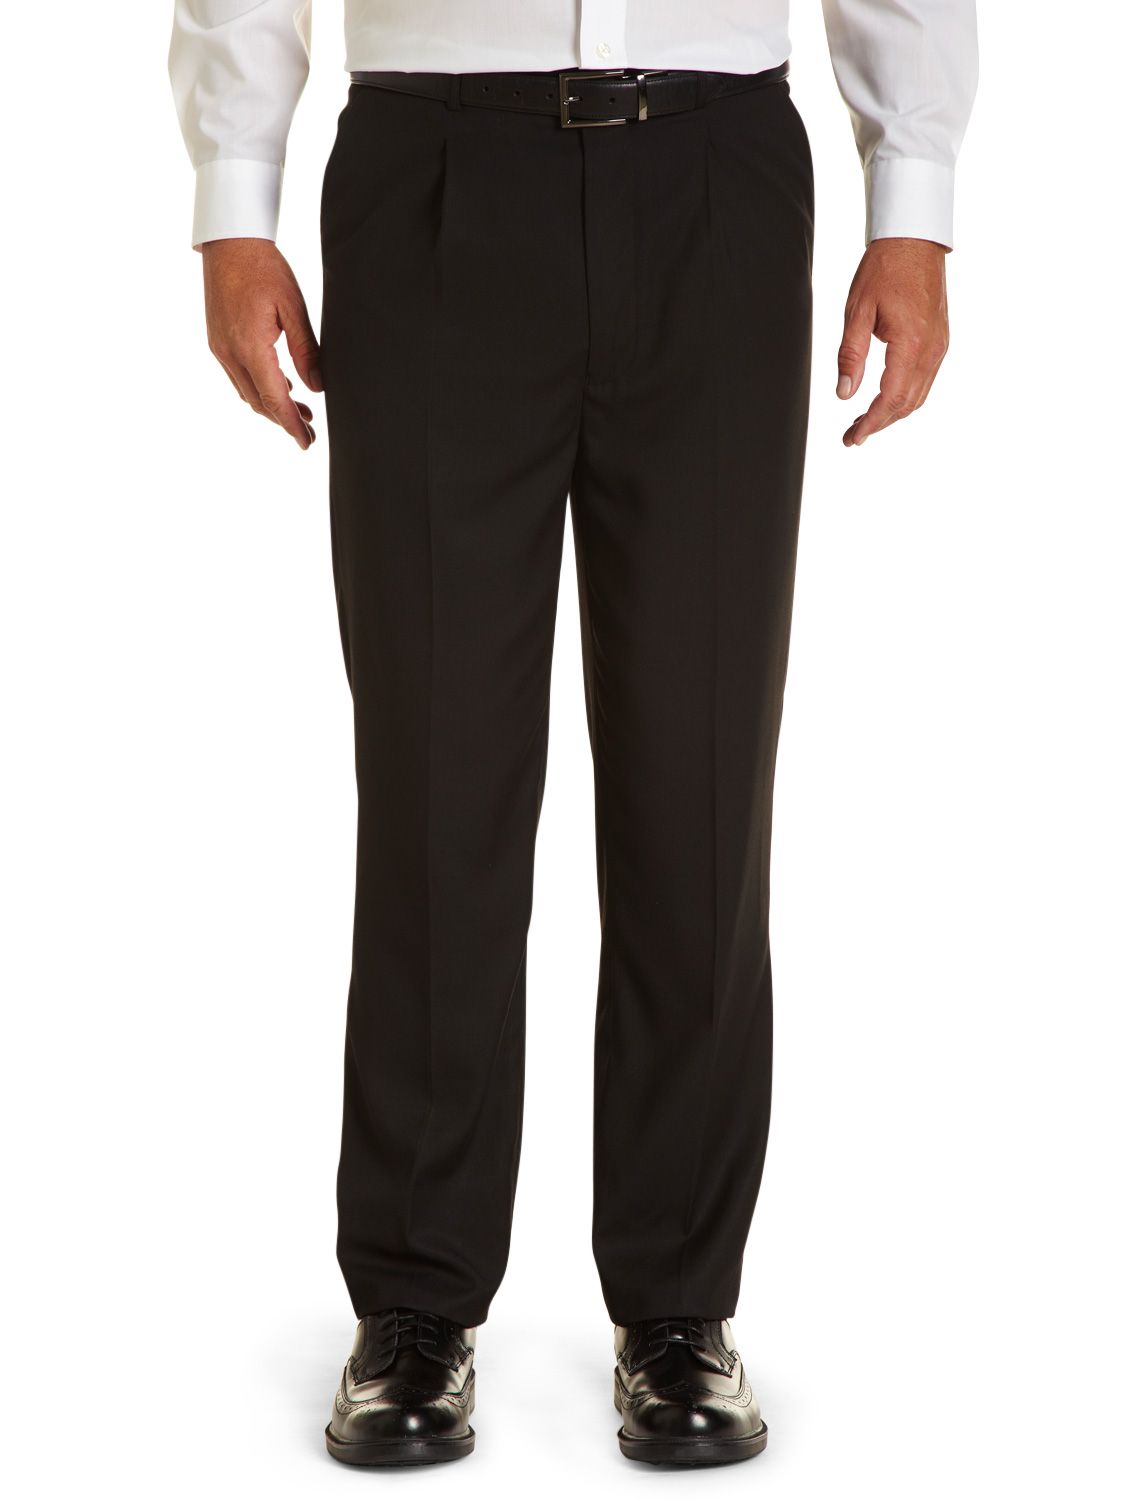 Traveler Technology Black Corded Stretch Suit Pants